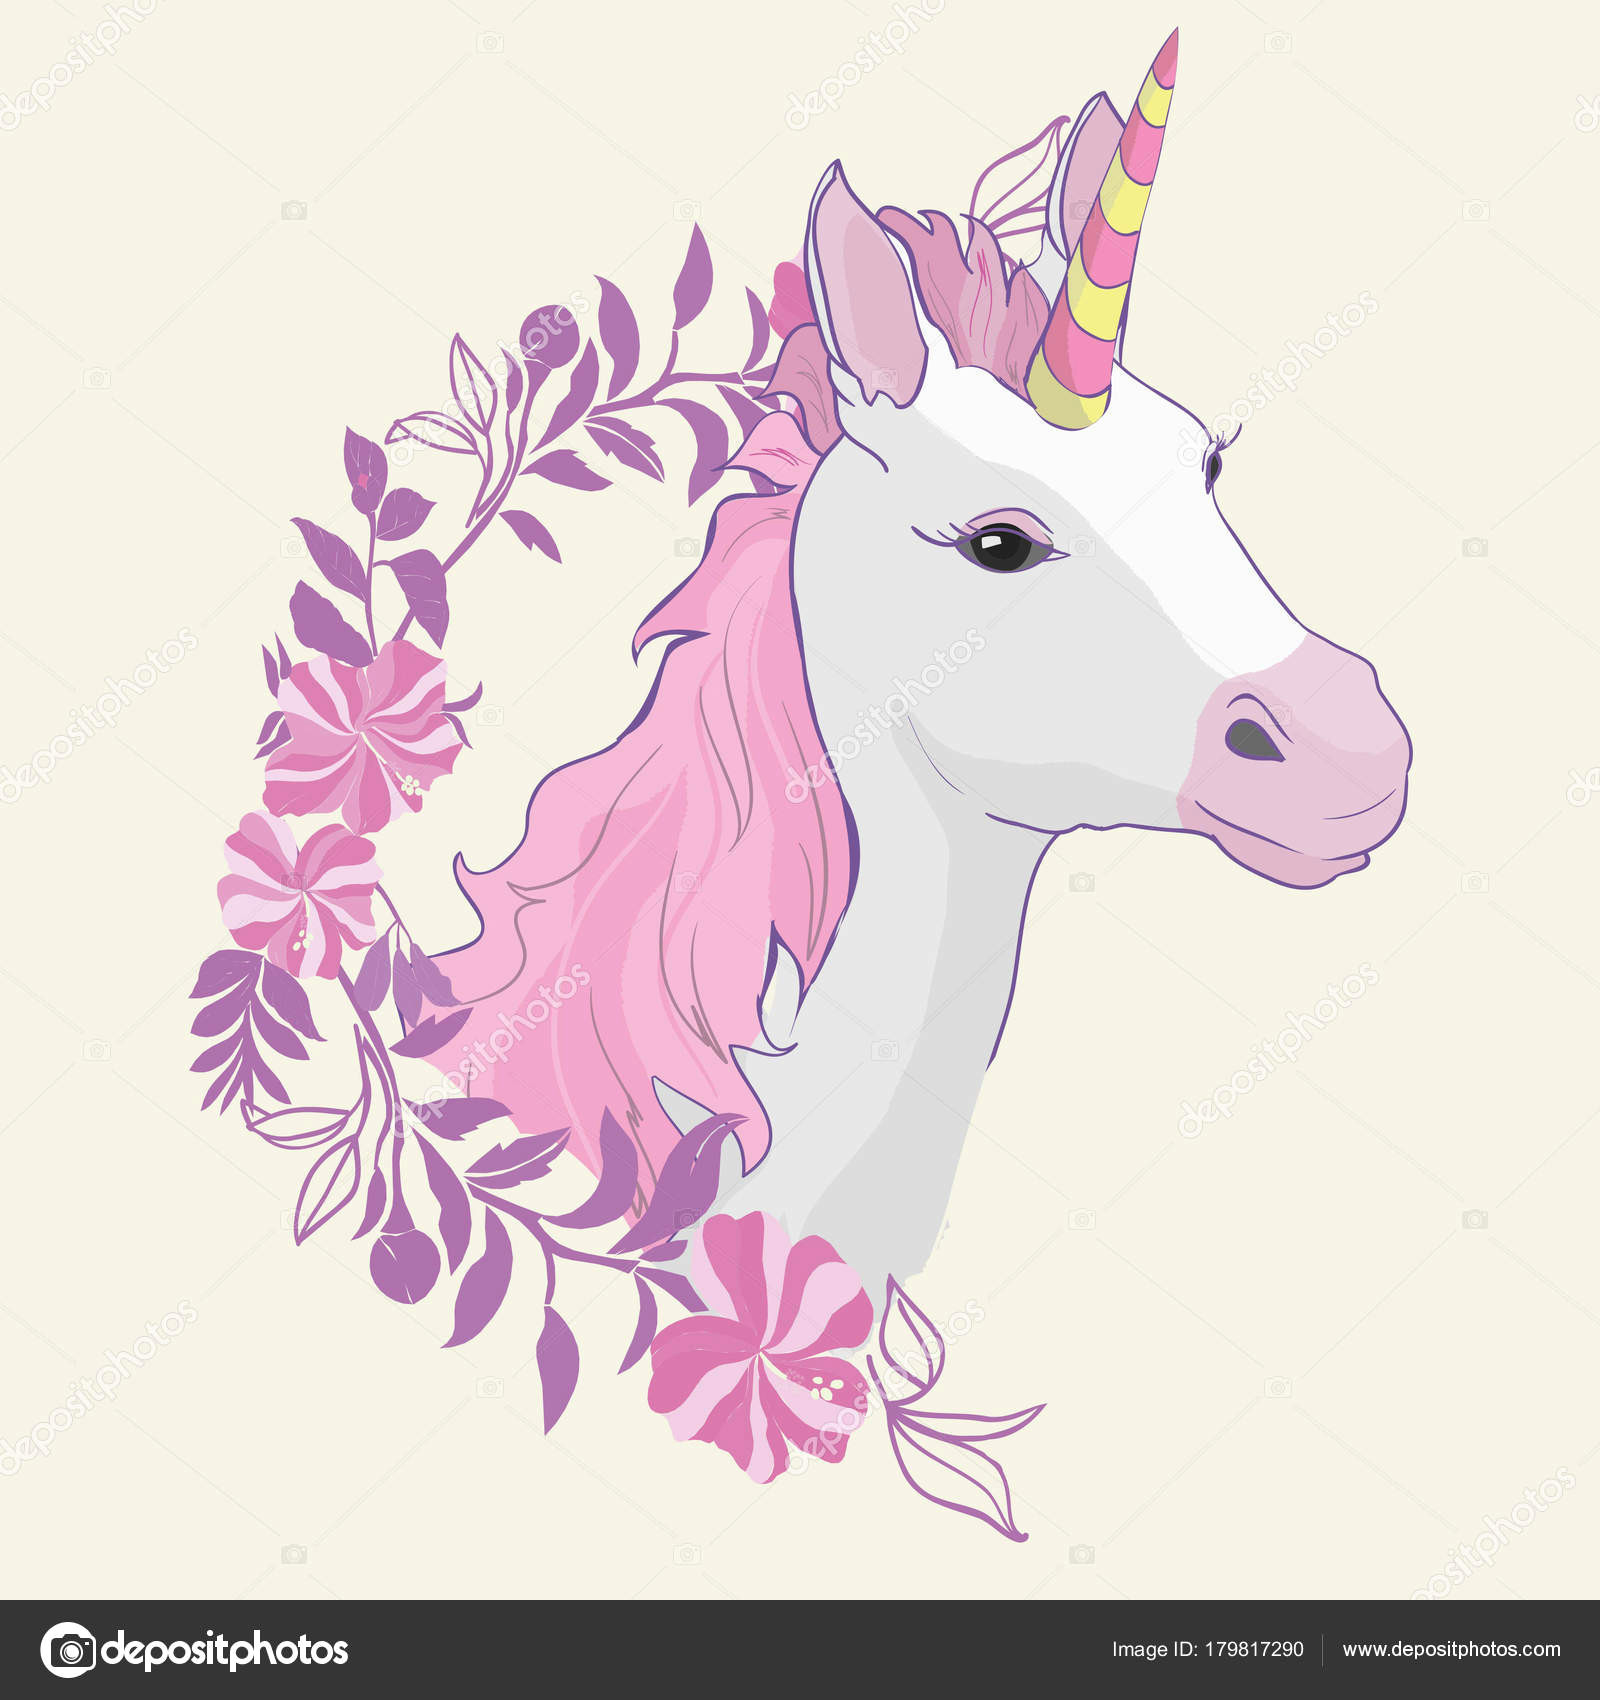 unicorn vector icon isolated on white head portrait horse sticker patch badge cute magic cartoon fantasy cute animal rainbow hair dream symbol